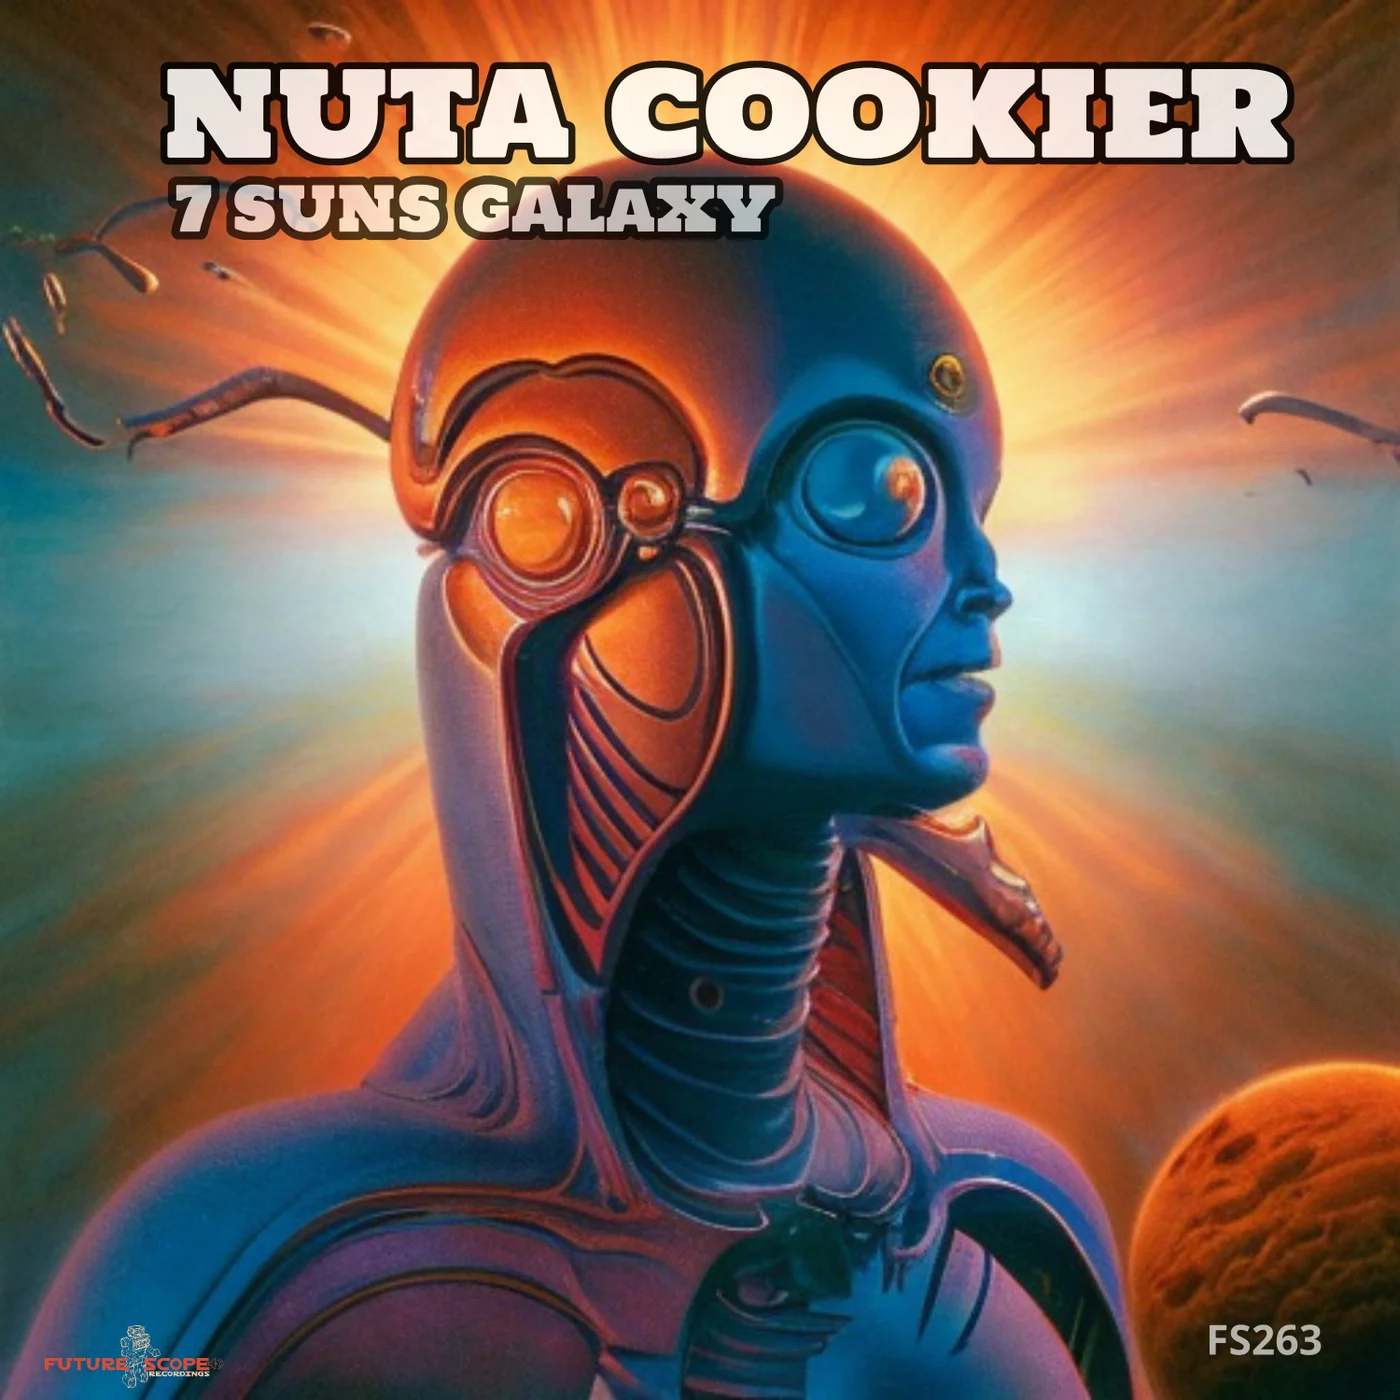 Sao Paolo artist Nuta Cookier presents “7 Suns Galaxy”